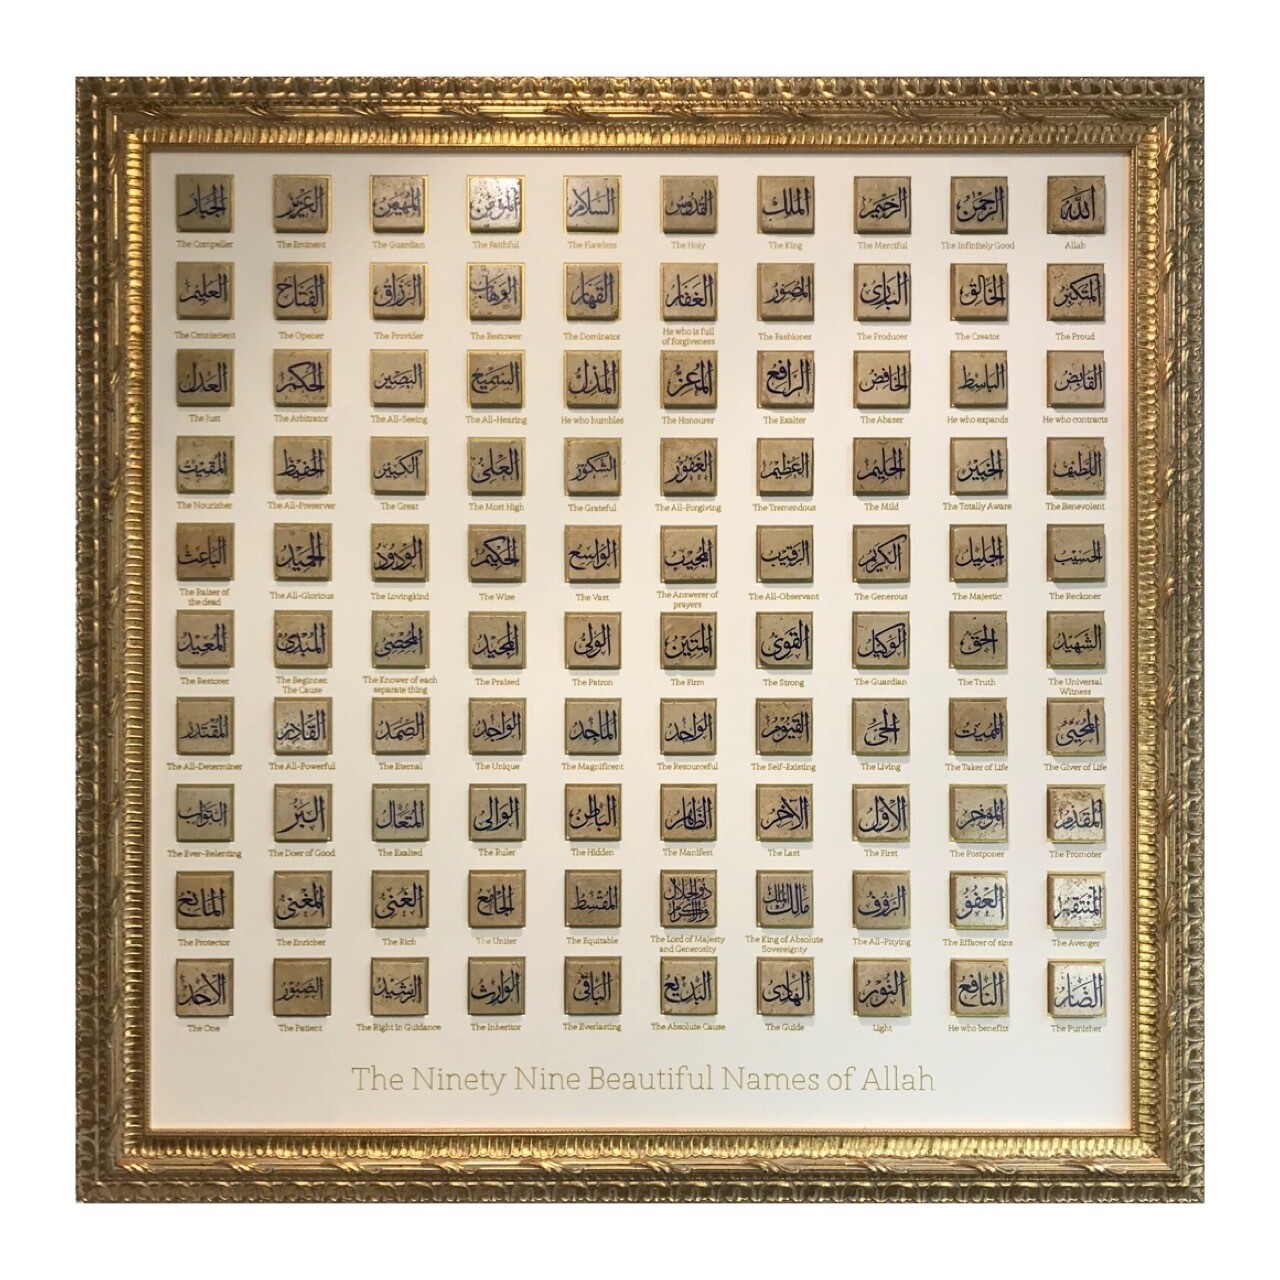 99 Names of Allah in Large Square 
Design in Gold Ornate Frame